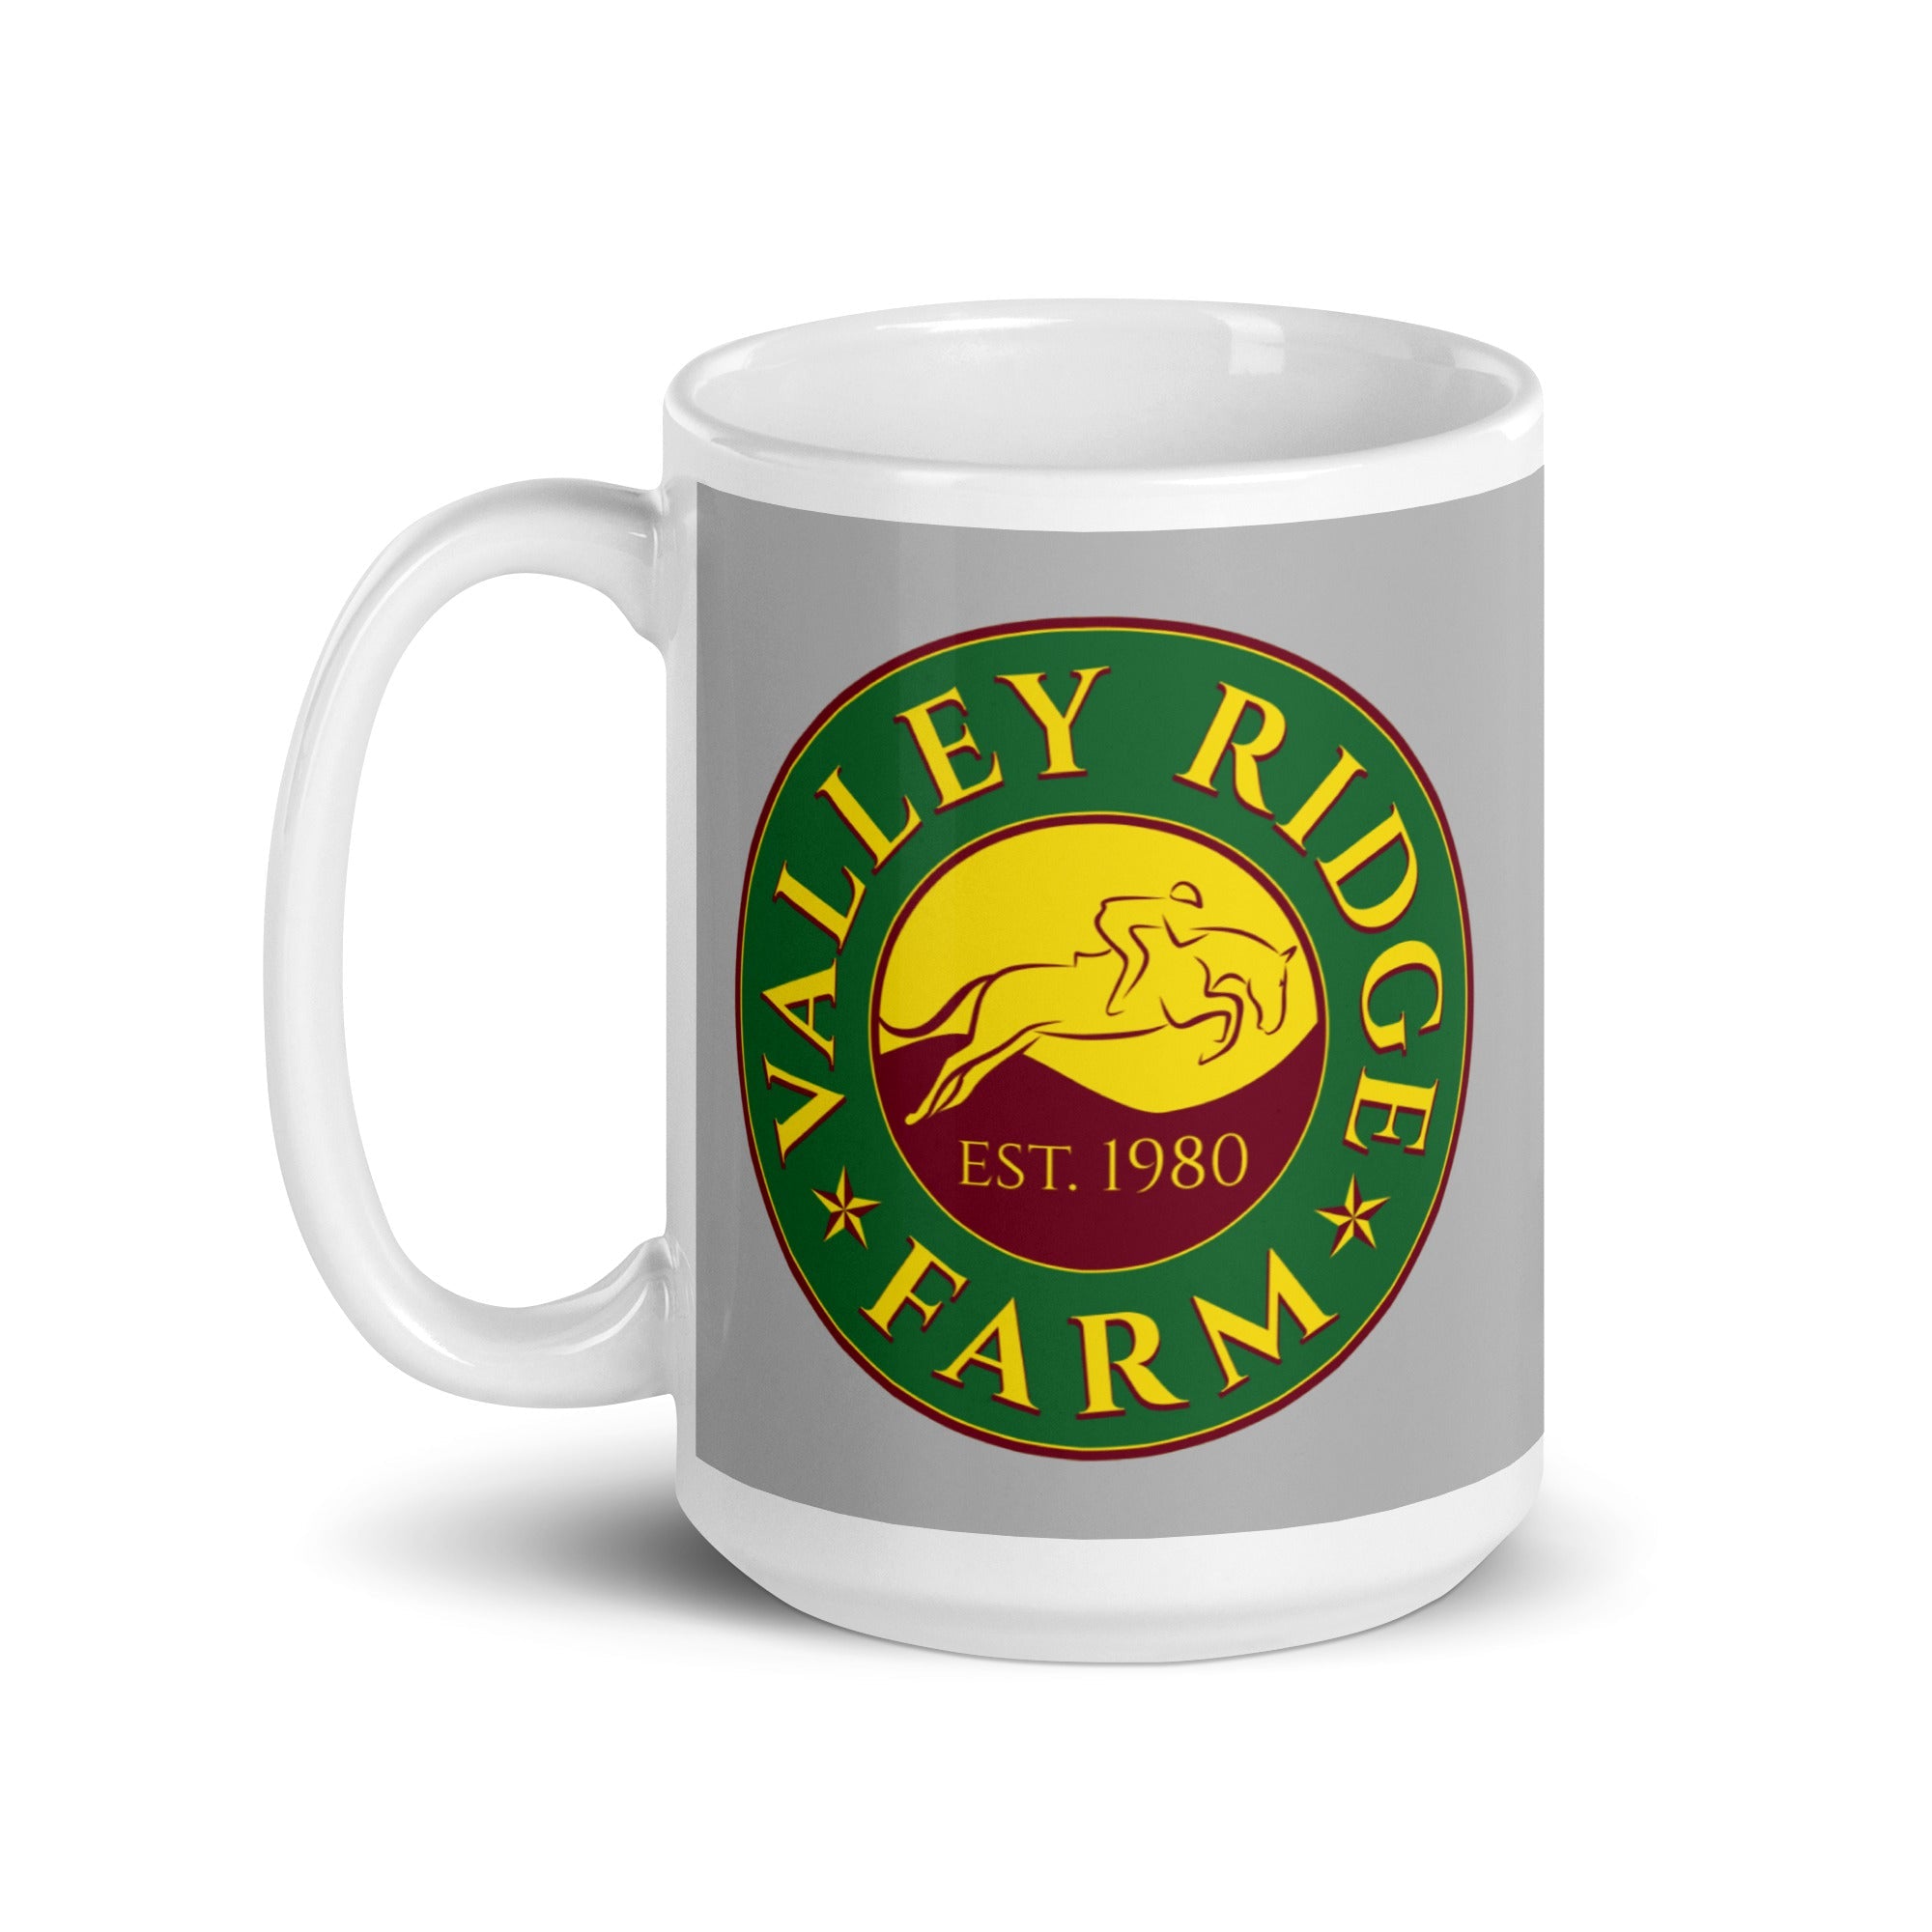 VRF Glossy mug